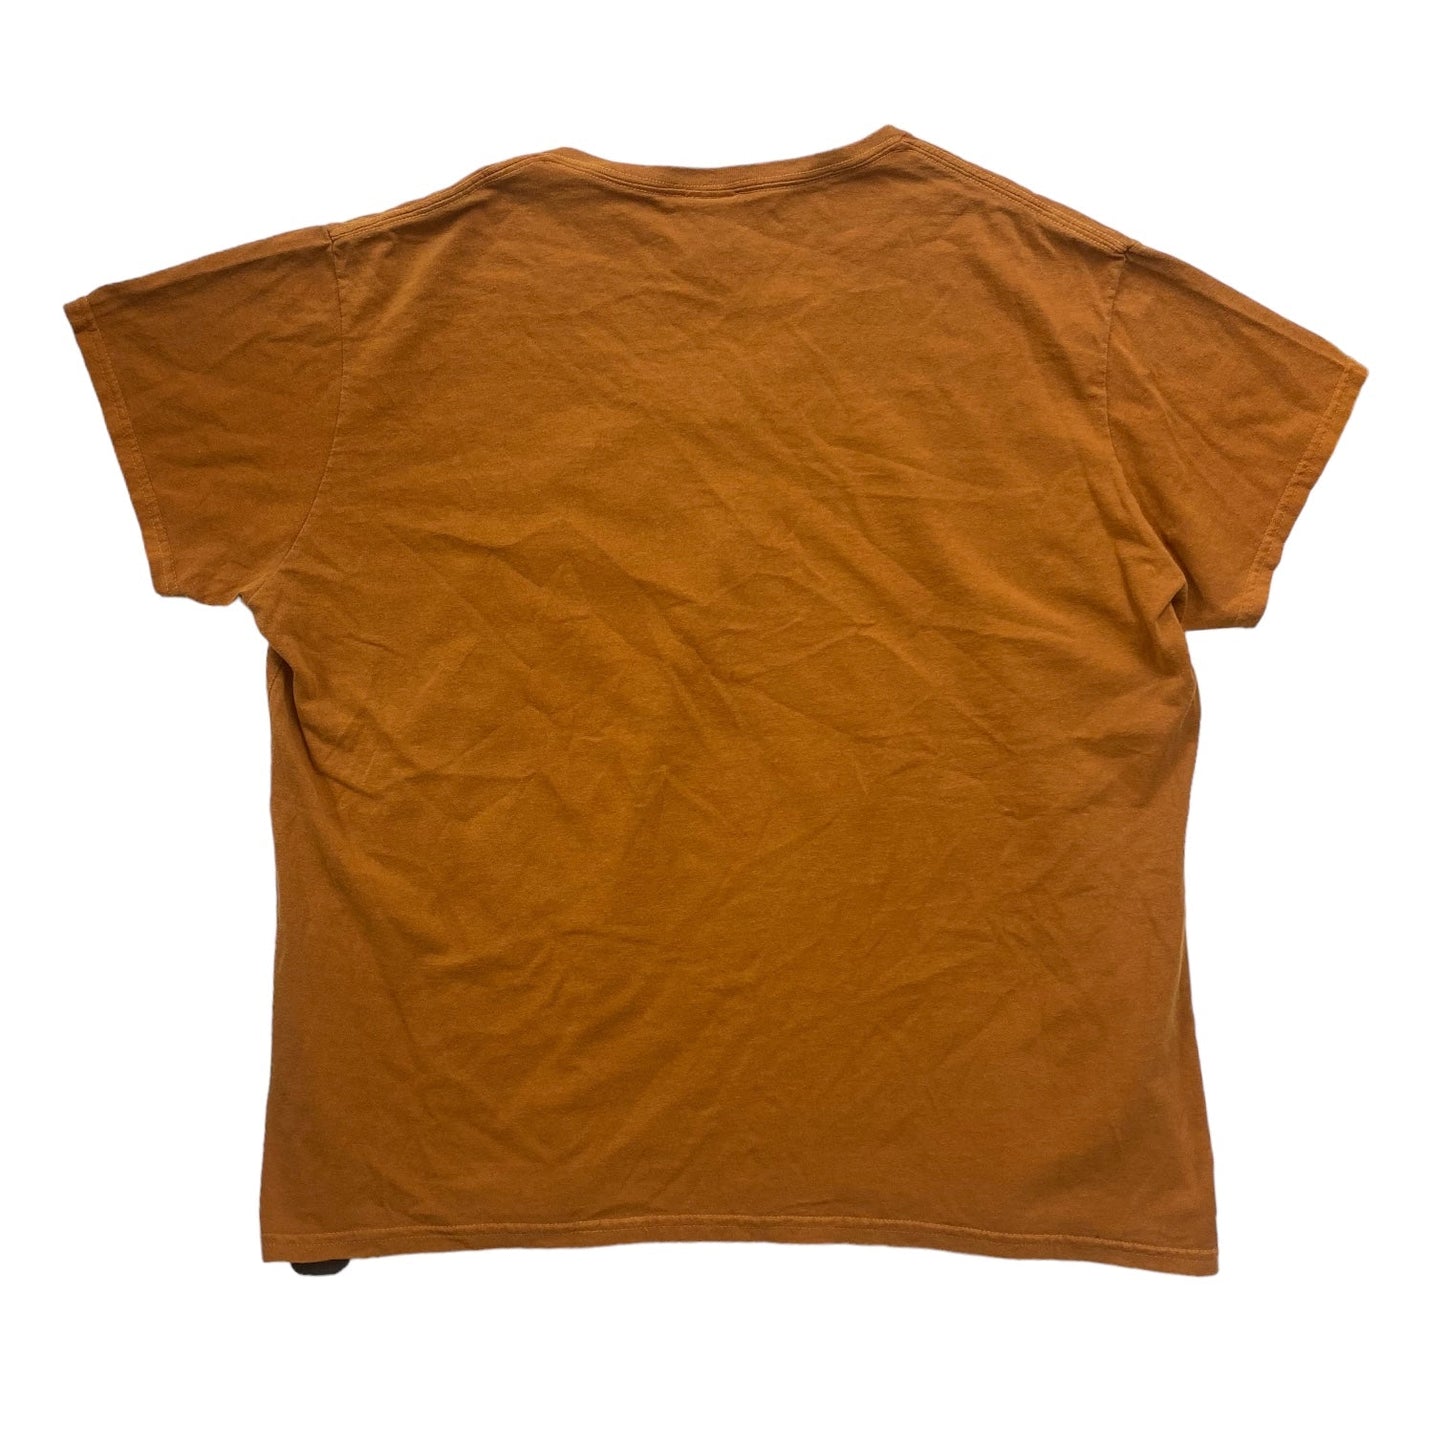 Multi-colored Top Short Sleeve Gildan, Size 3x